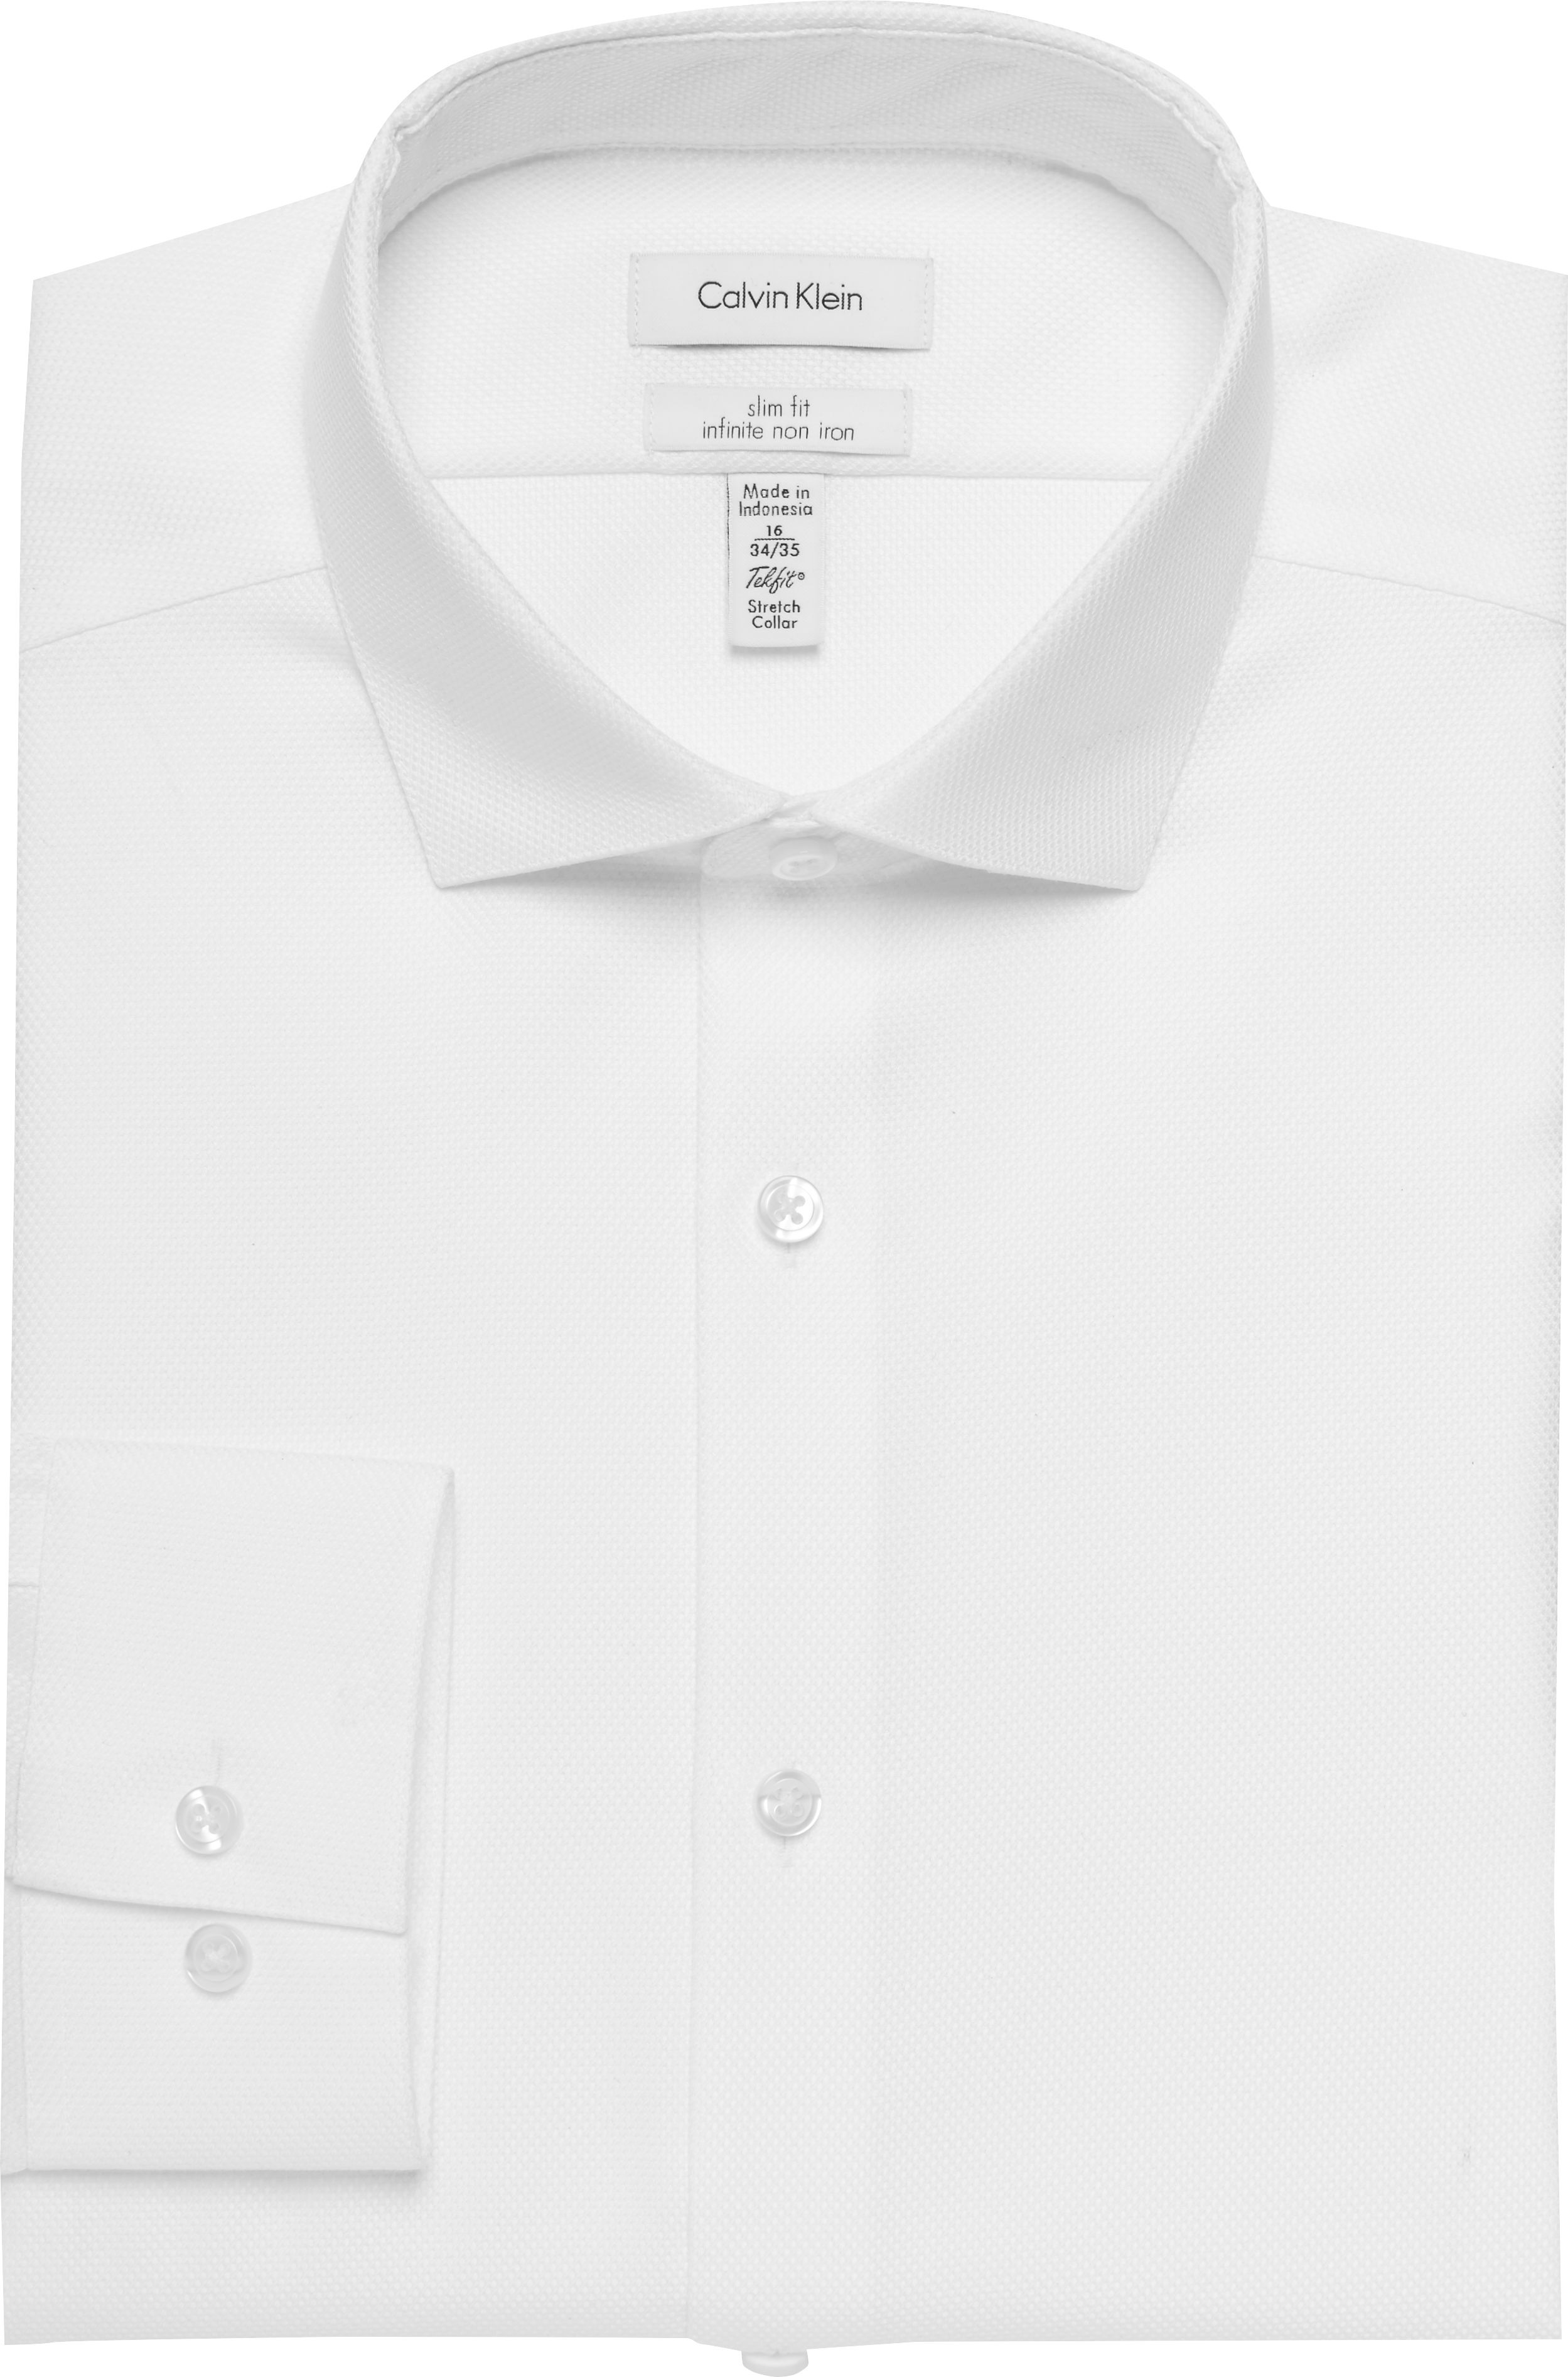 Calvin Klein Slim Fit Dress Shirt, White - Men's Sale | Men's Wearhouse